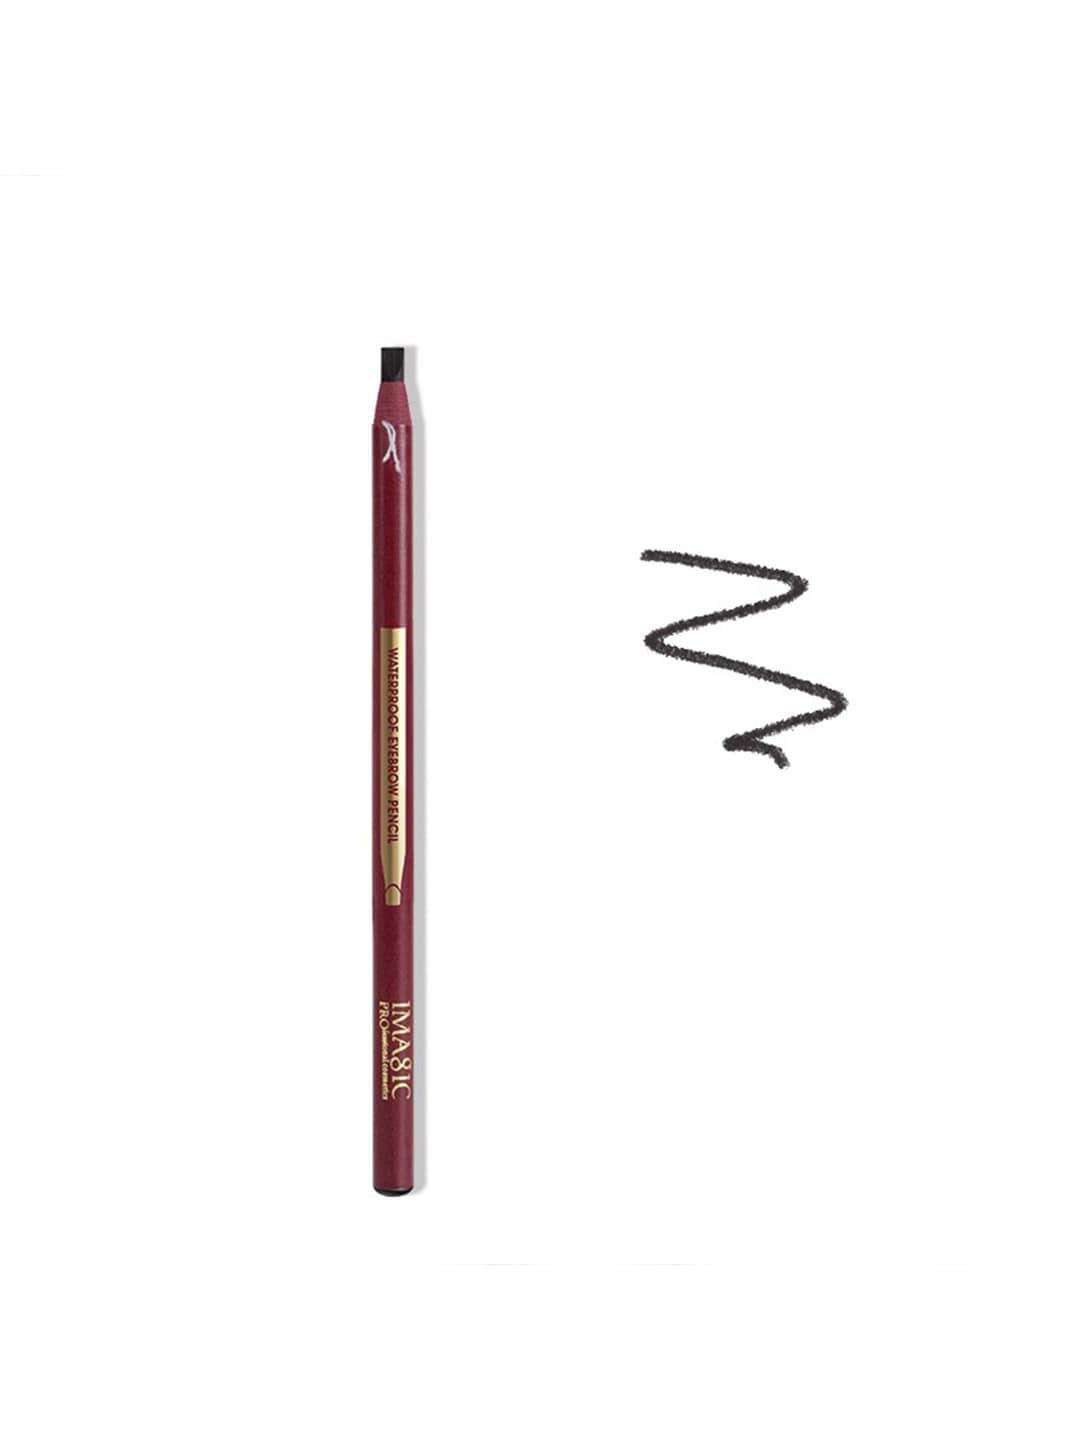 imagic professional cosmetics hard formula peelable eyebrow pencil 8 g - black ey-344